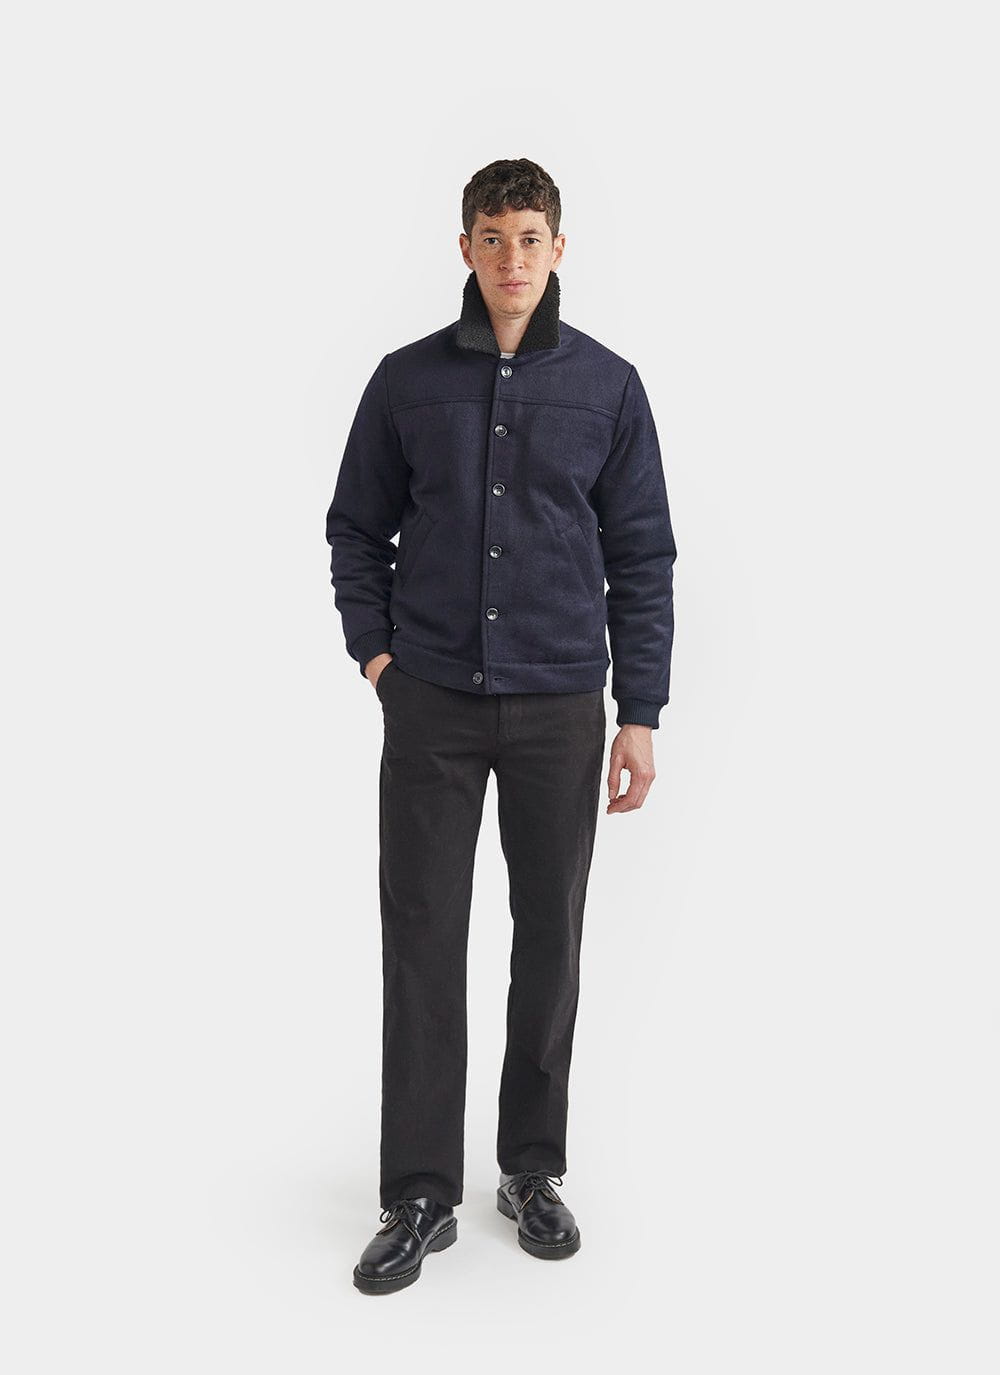 Men's Whitley Jacket | Navy Melton & Percival Menswear